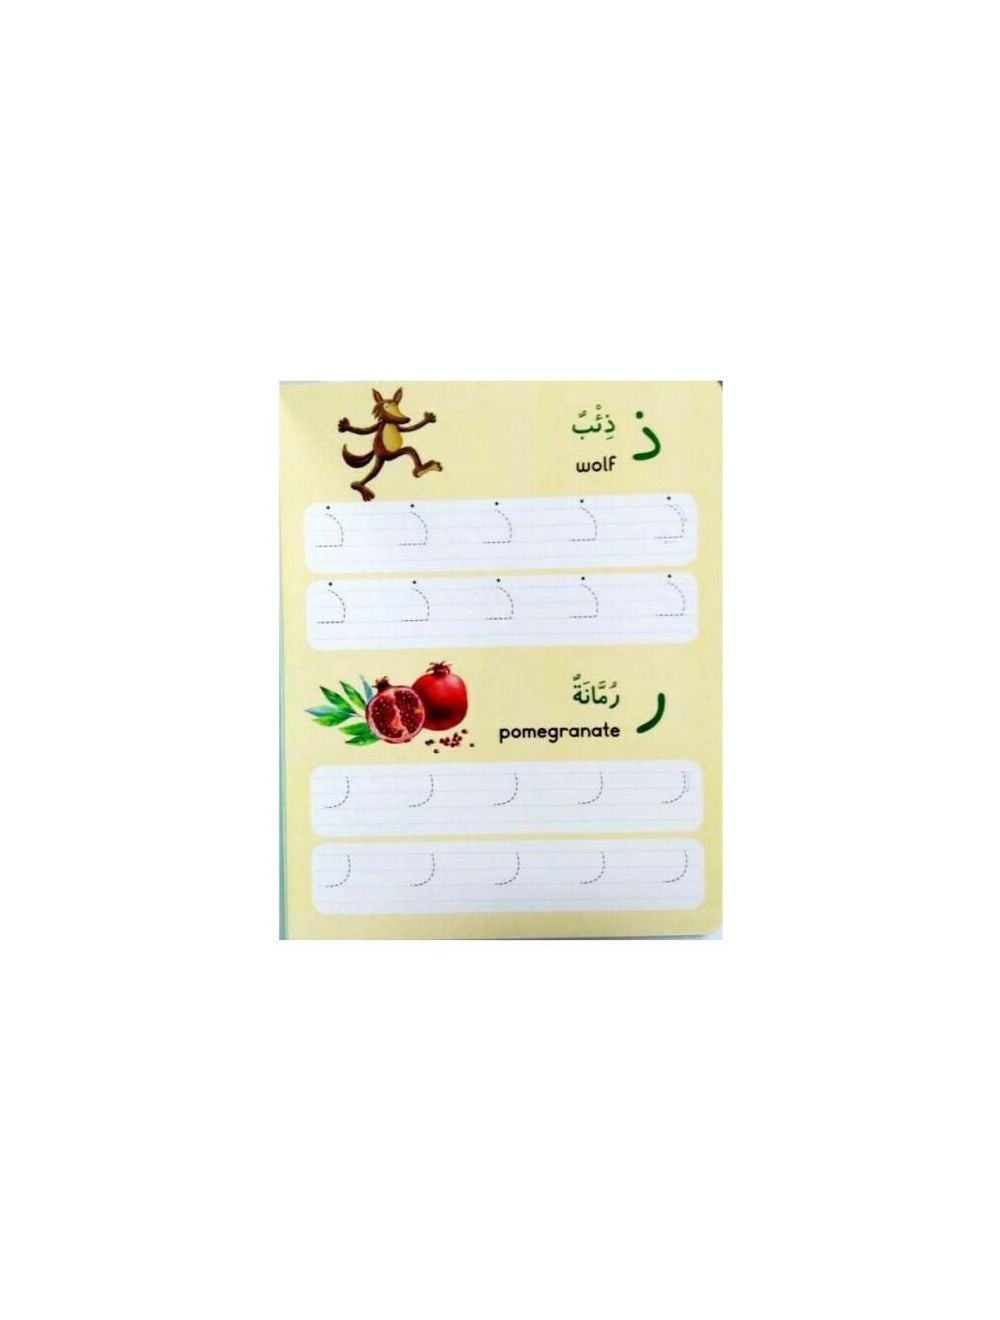 Arabic Writing Board Book - Wipe Clean - jubbas.com